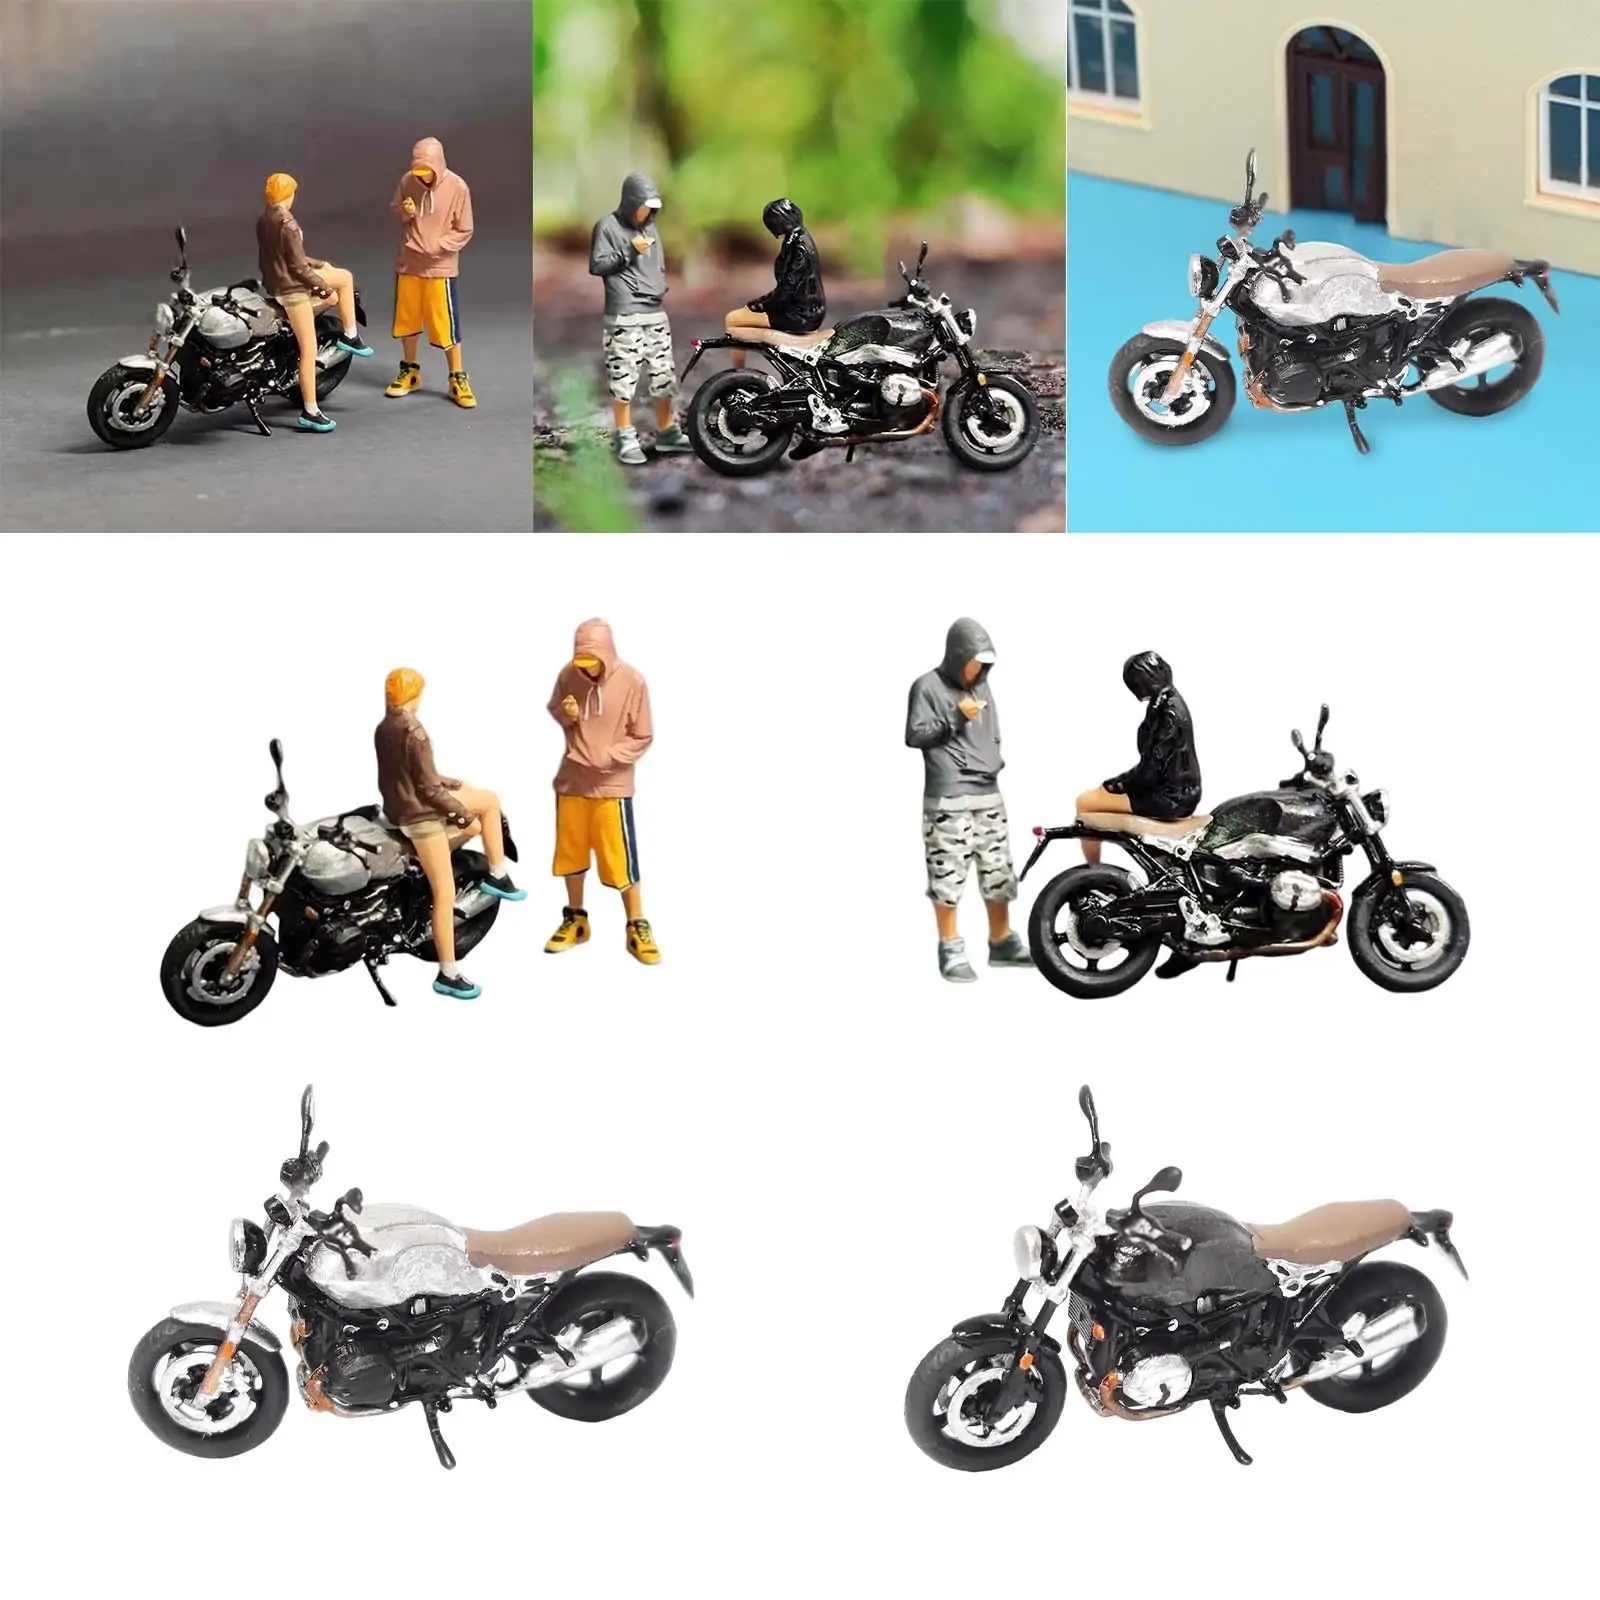 1/64 Figures Motorcycle Resin Doll Sand table Scene Miniature Scenes Desktop Ornament Tiny People Diorama Scenery Doll Figurines